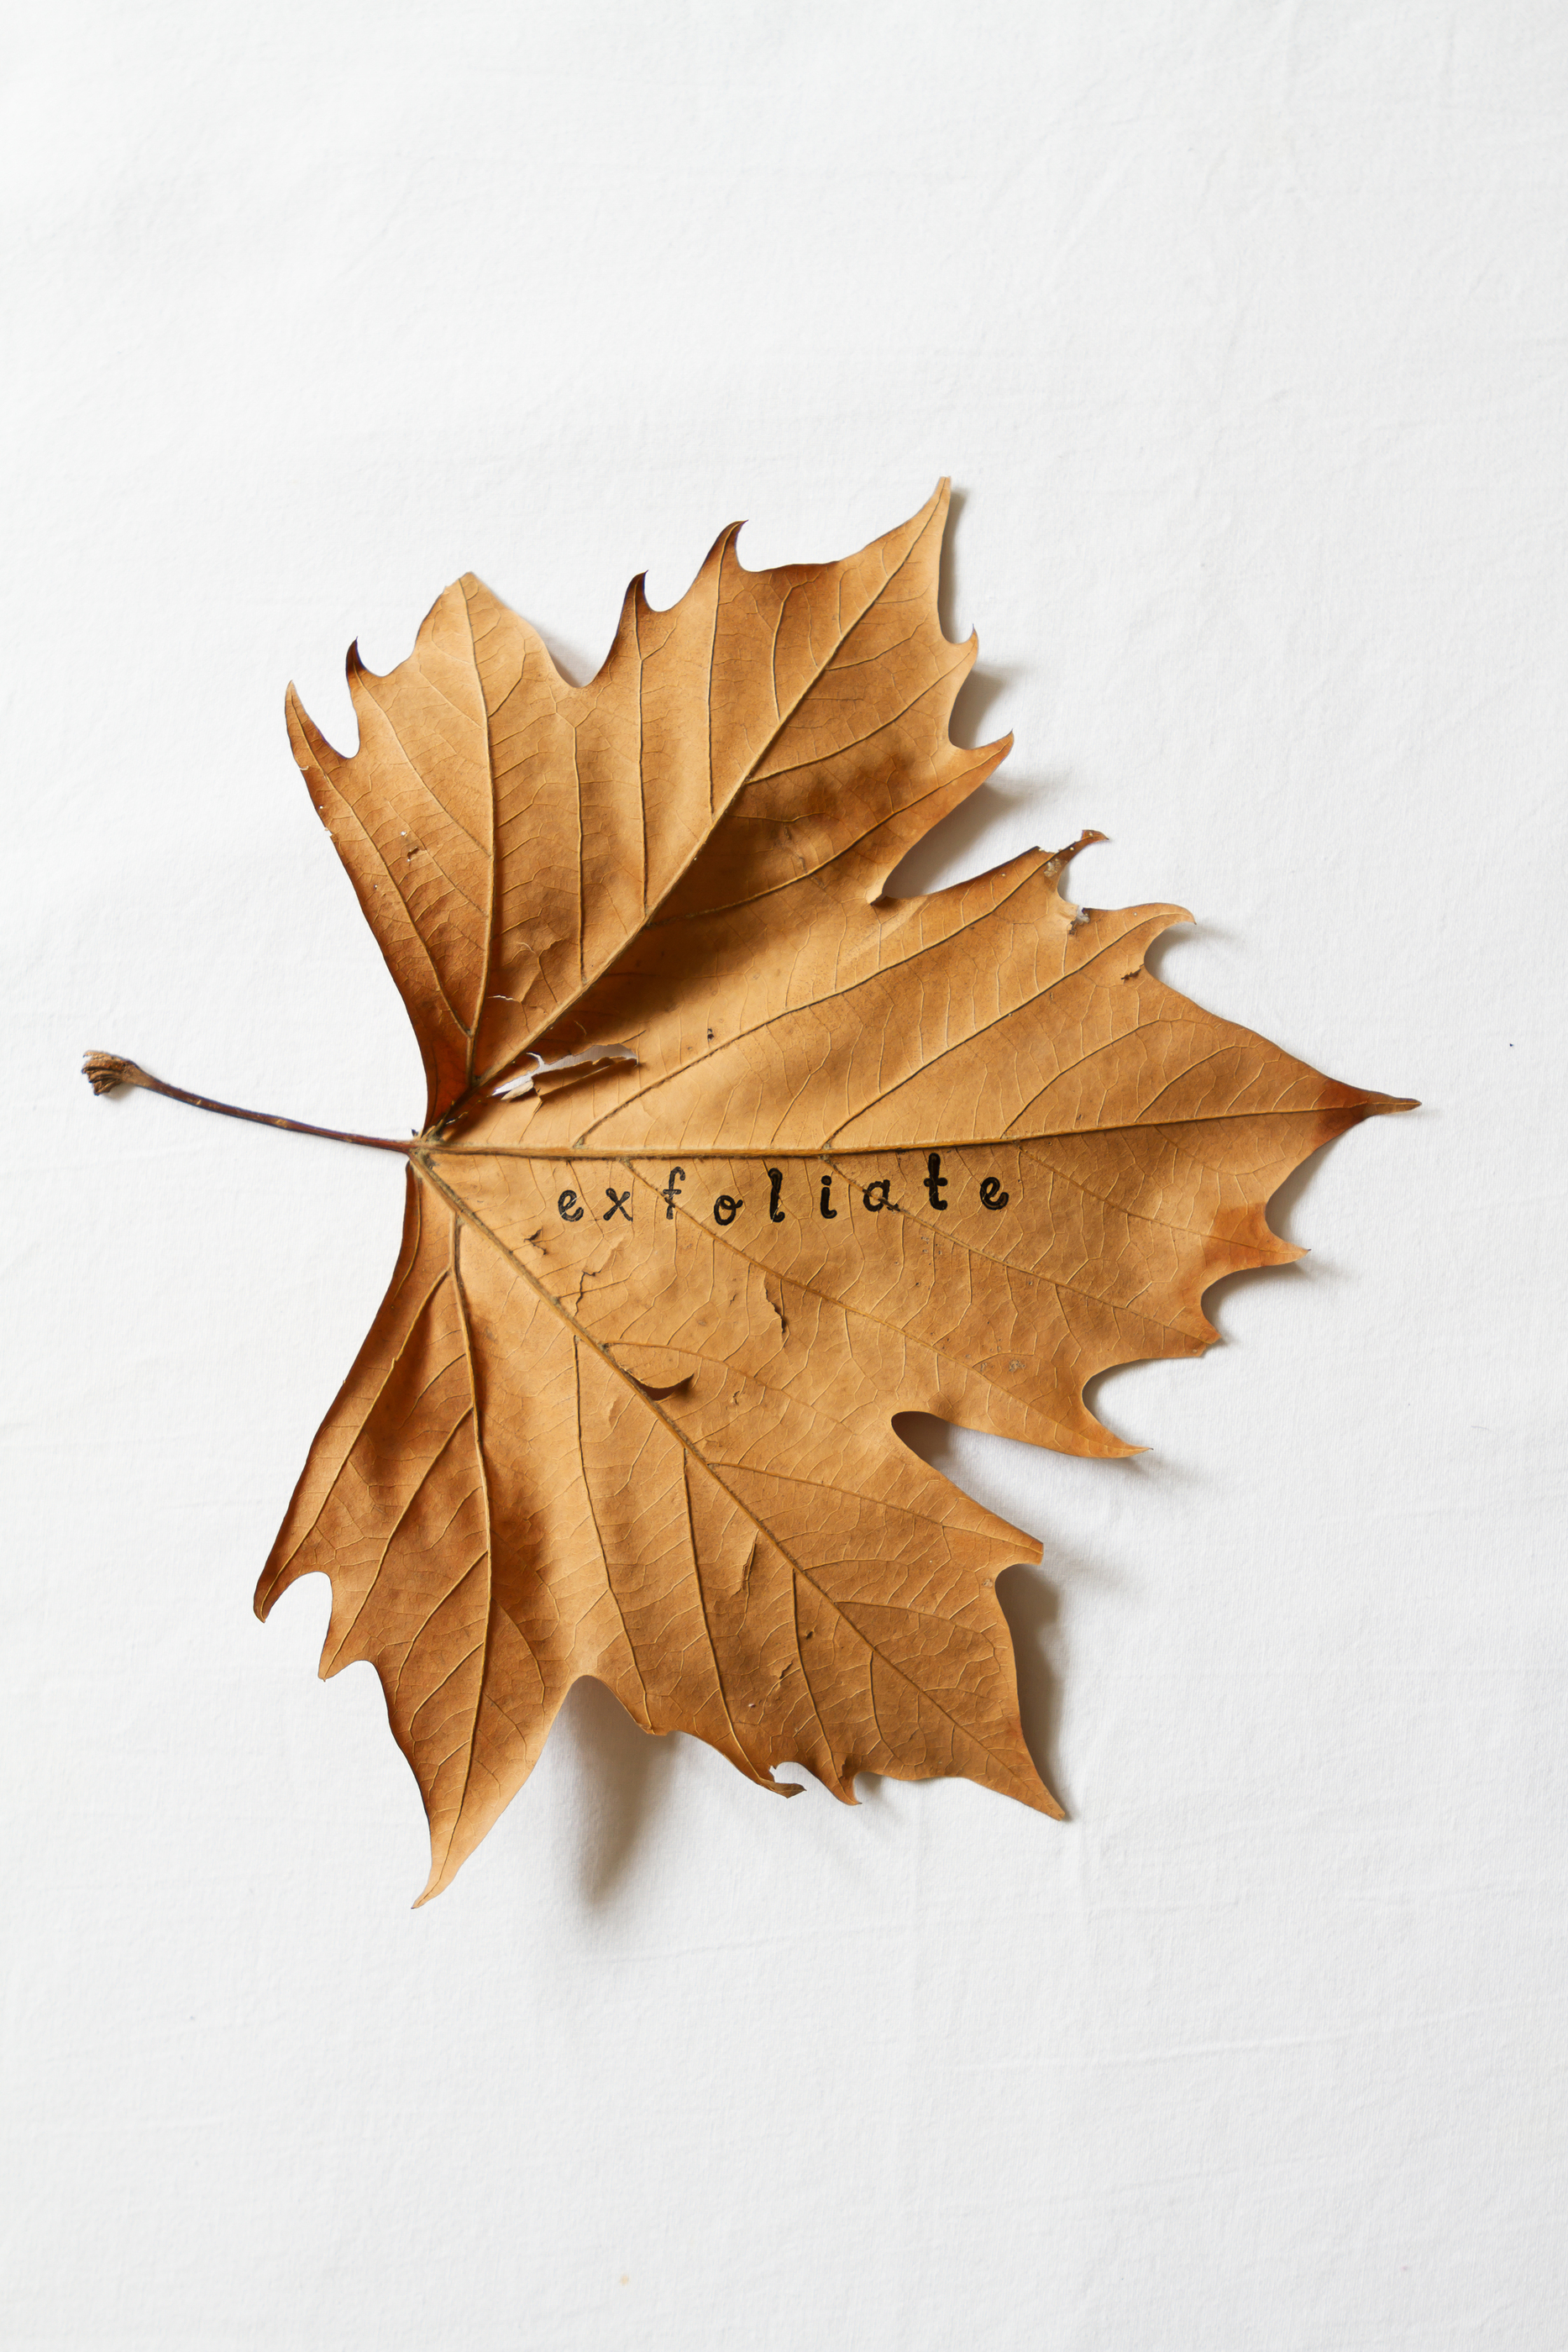 Exfoliate Word Printed On Dead Autumn Leaf